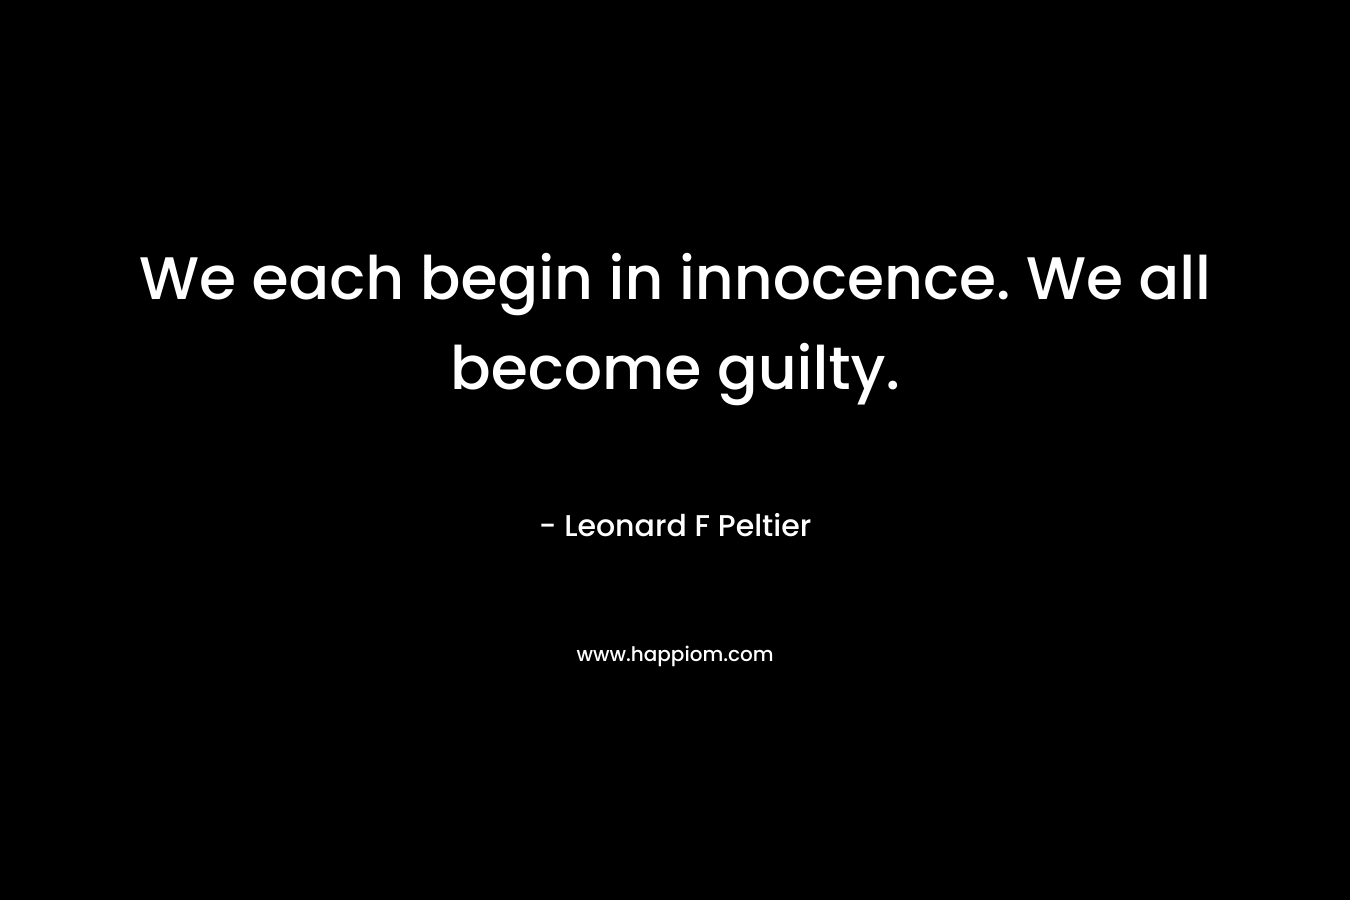 We each begin in innocence. We all become guilty.